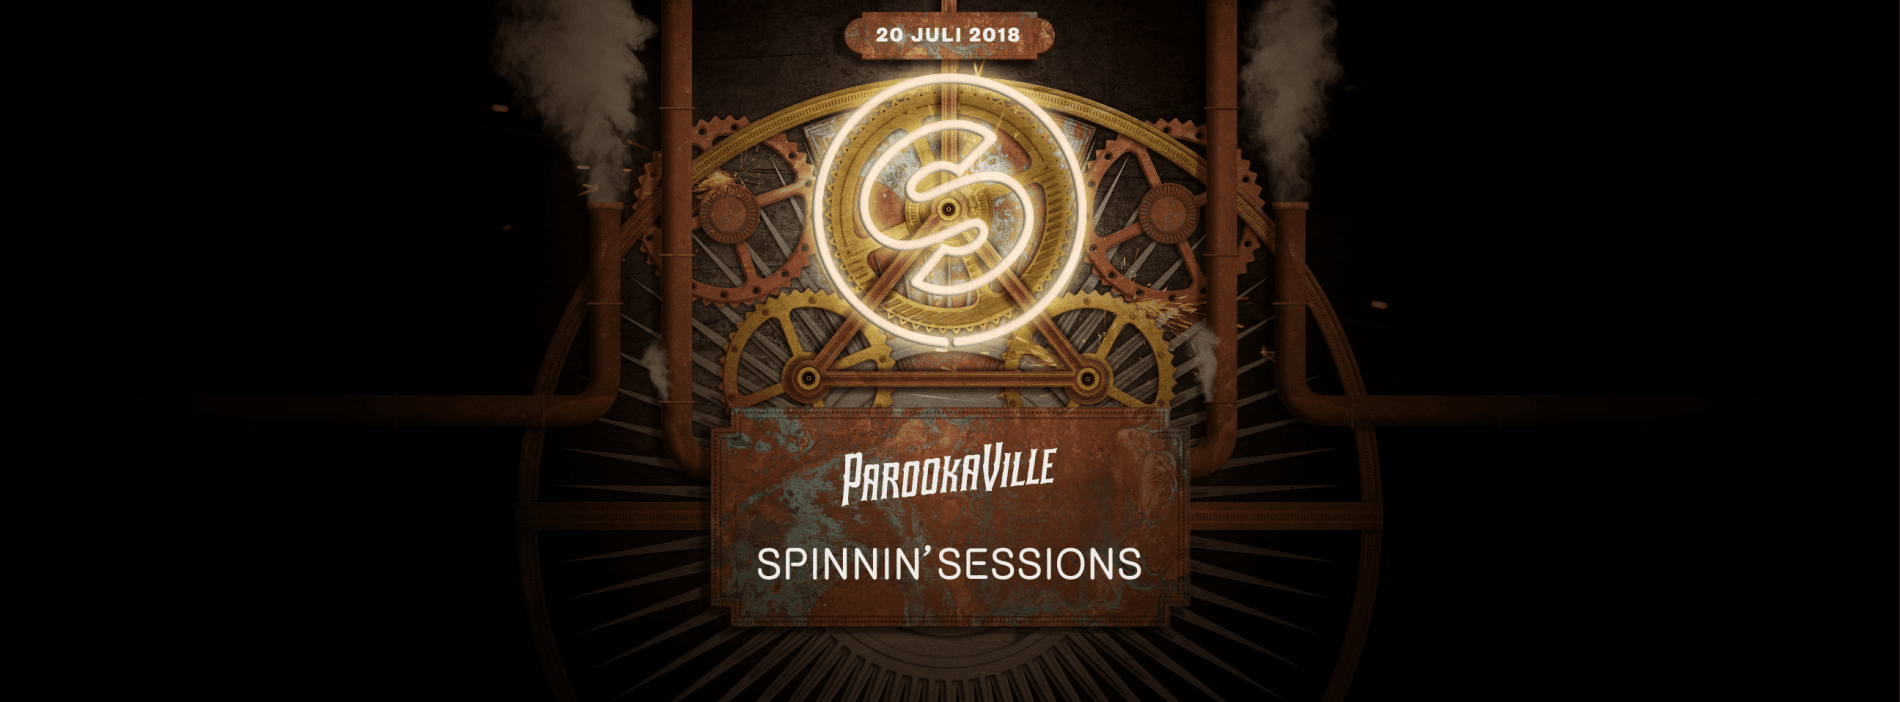 Spinnin' Sessions Spinnin' Sessions | Parookaville